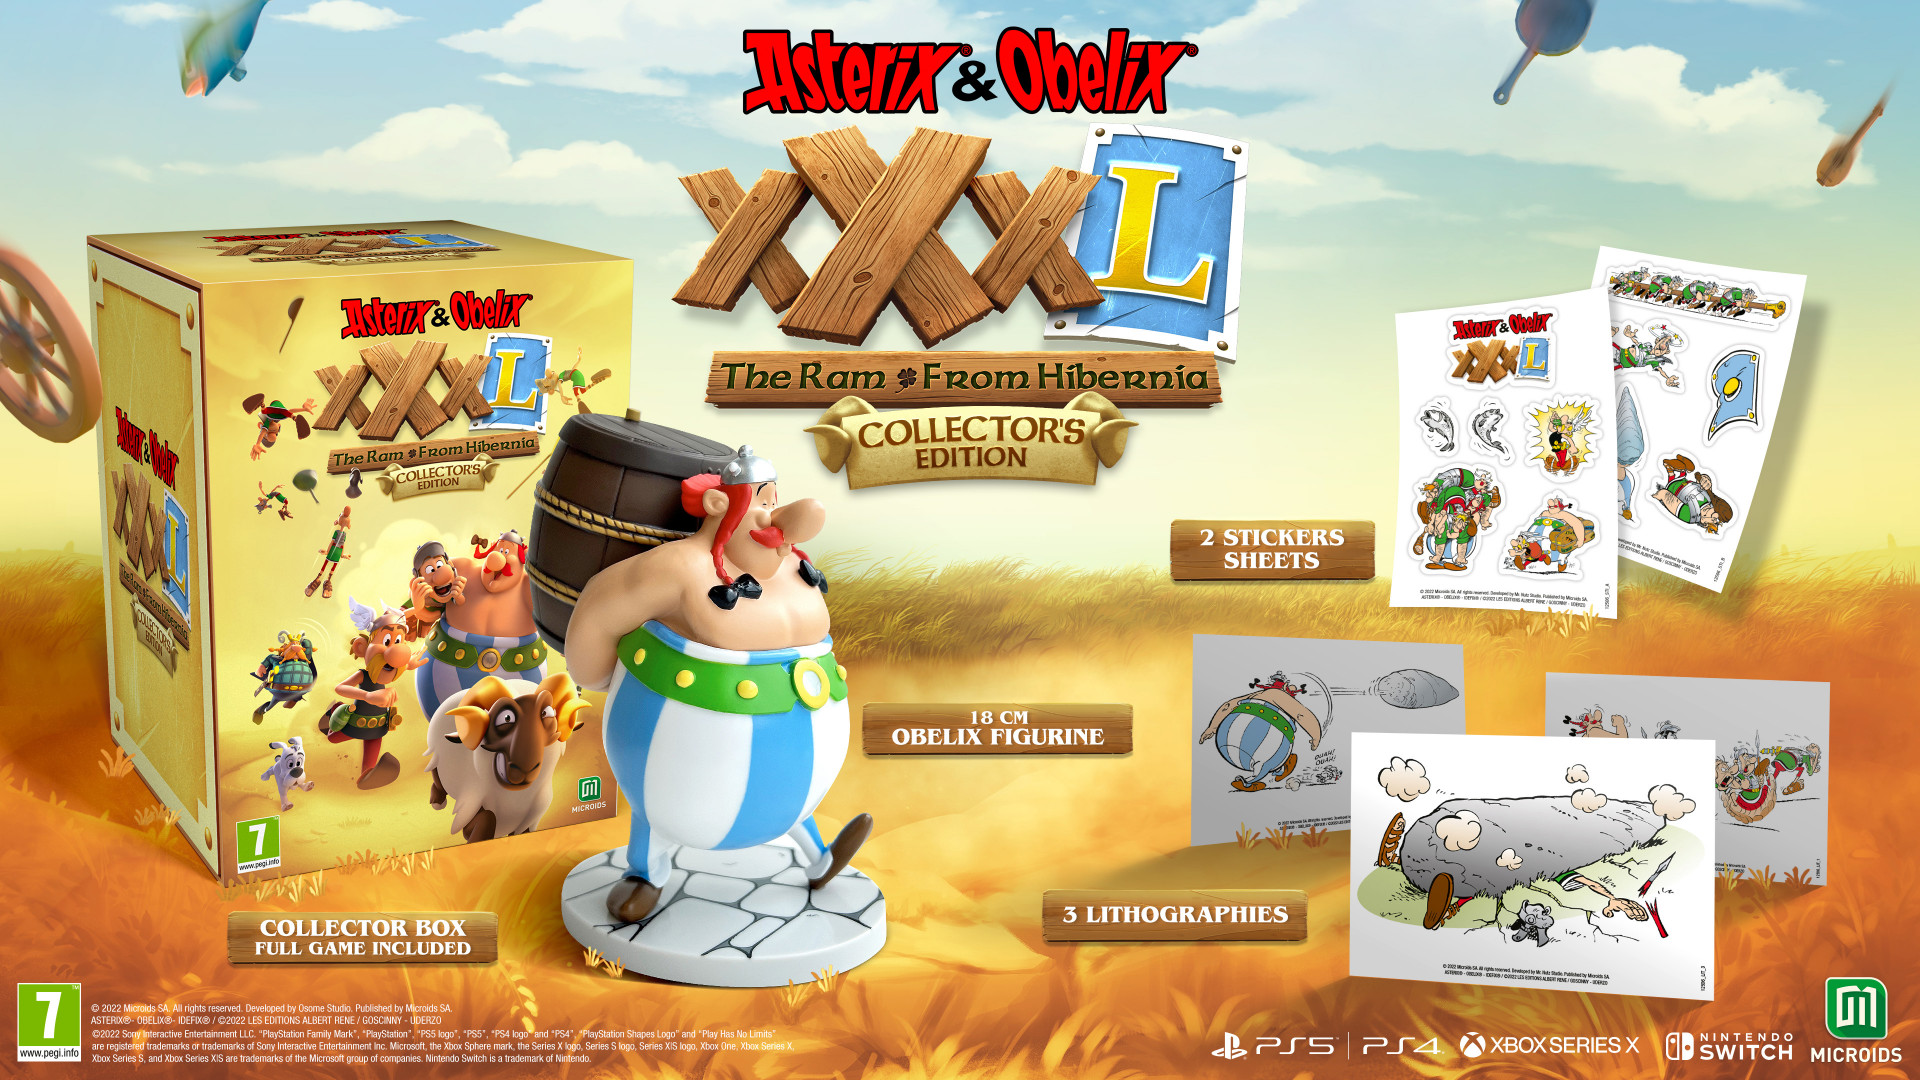 Asterix & Obelix XXXL: The Ram From Hibernia Collector's Edition - Nintendo Switch